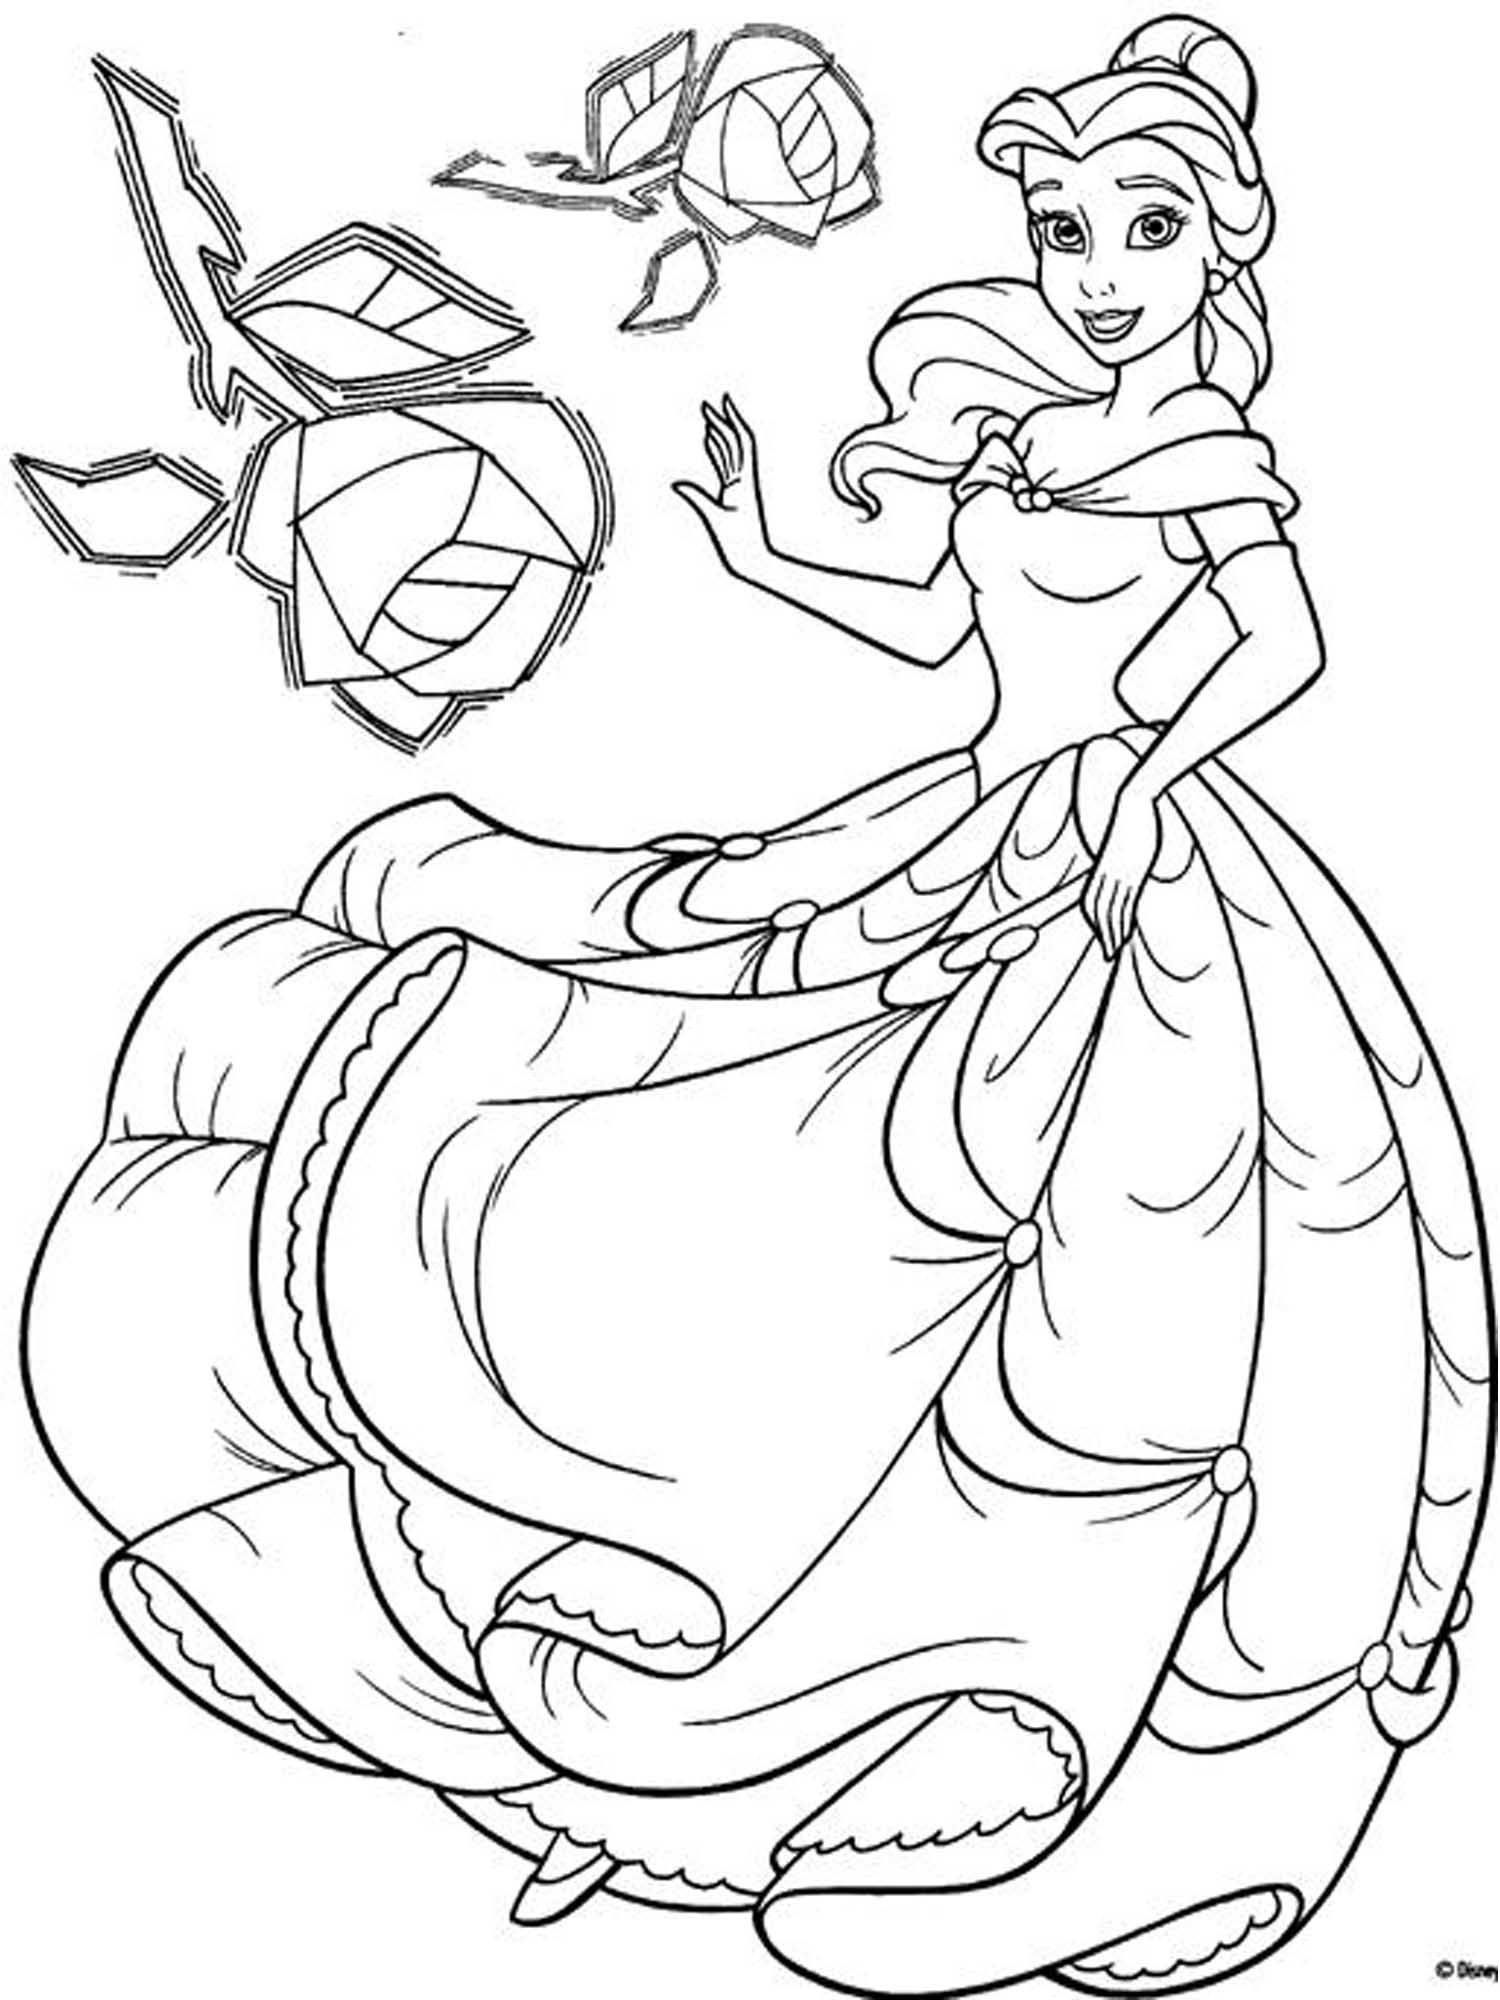 Coloring Pages Of Disney Princess Jasmine